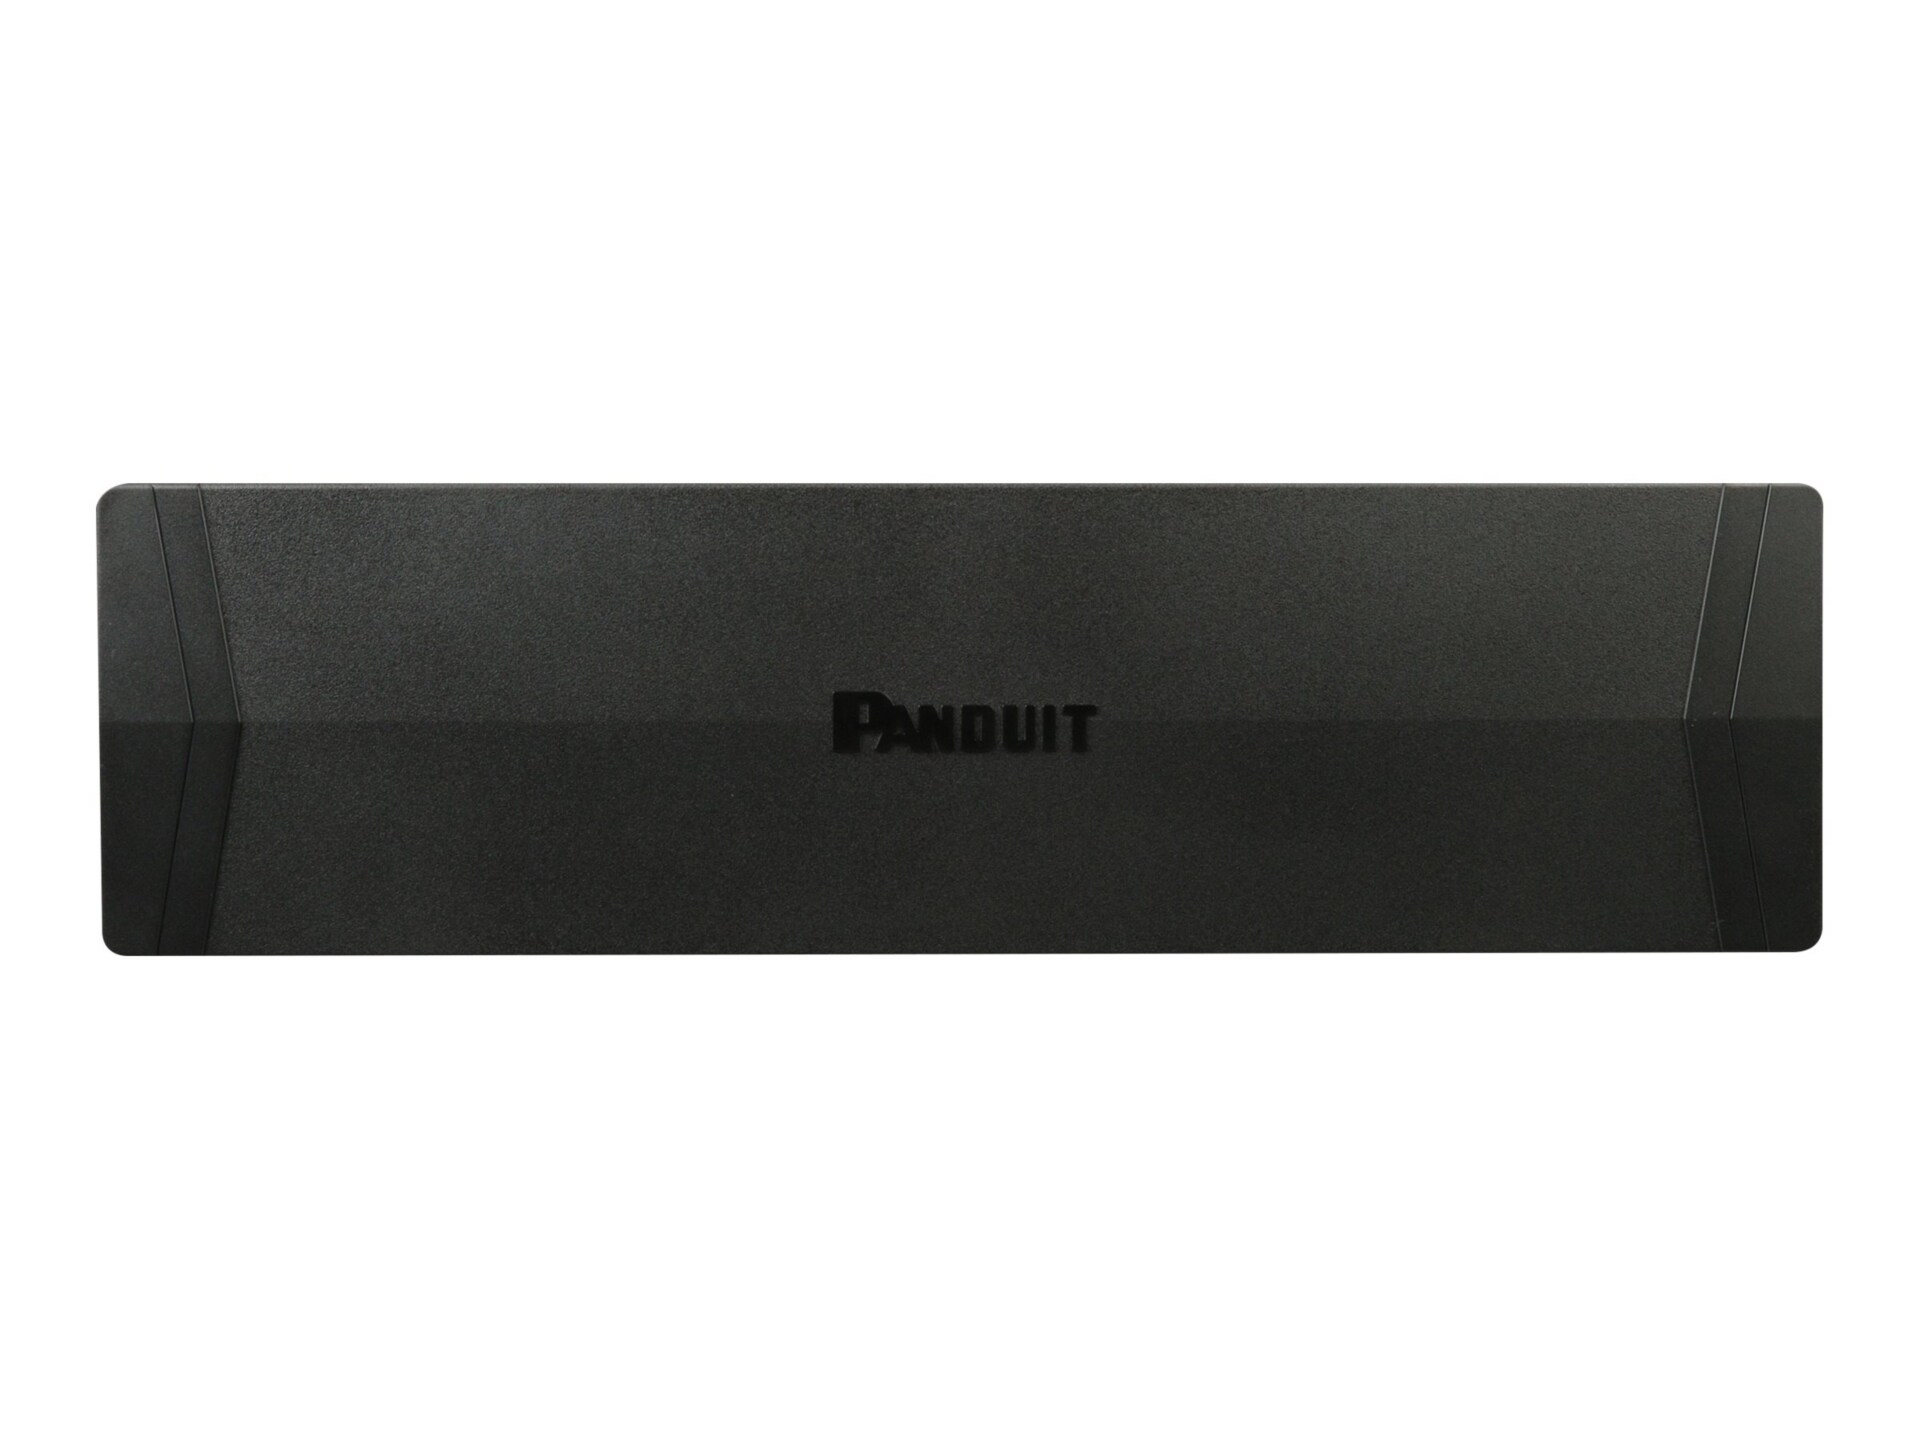 Panduit PatchRunner 2 - rack cable management panel (horizontal) - 3U